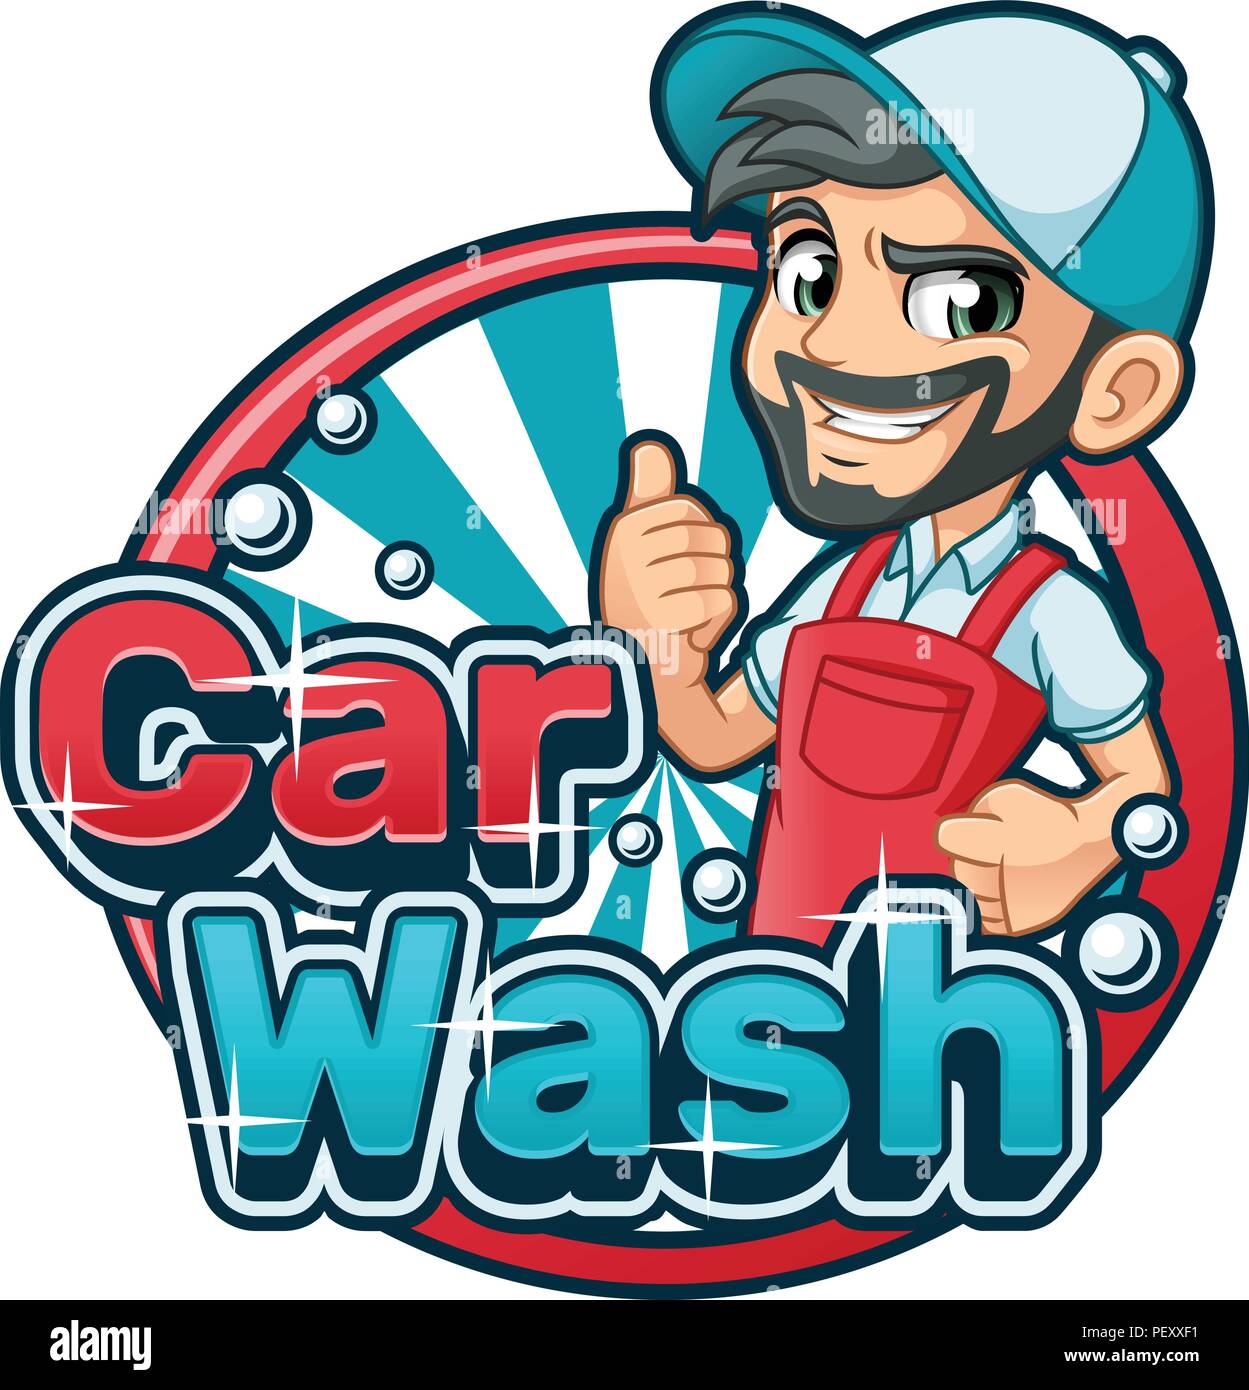 Car wash cartoon logo character design vector illustration Stock Vector  Image & Art - Alamy